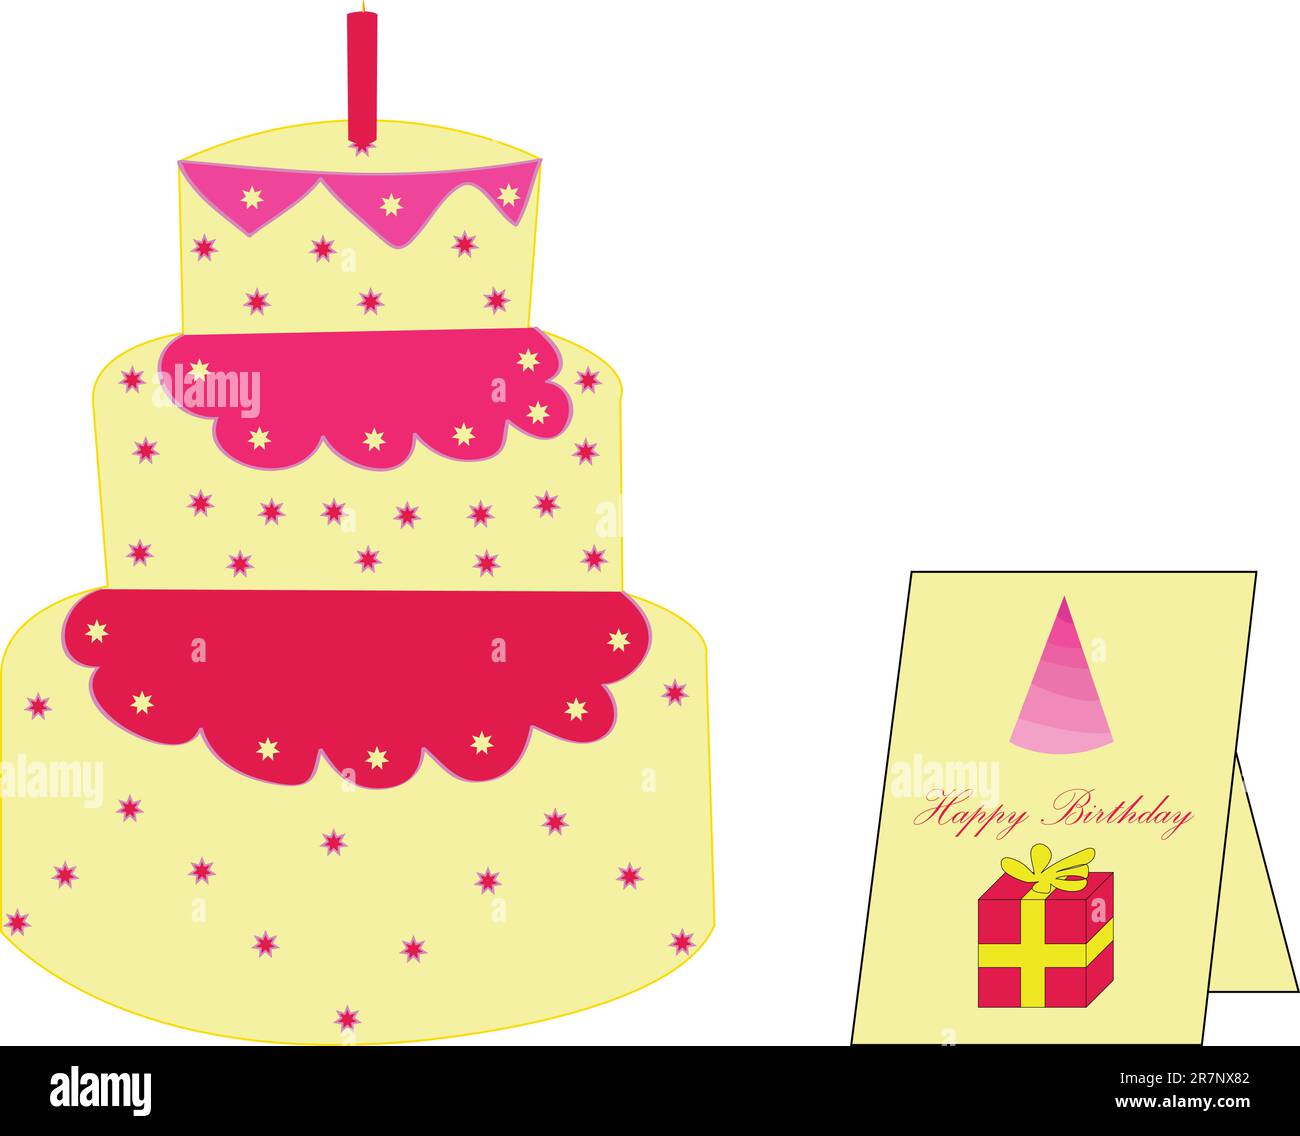 illustration of birthday cake - vector Stock Vector